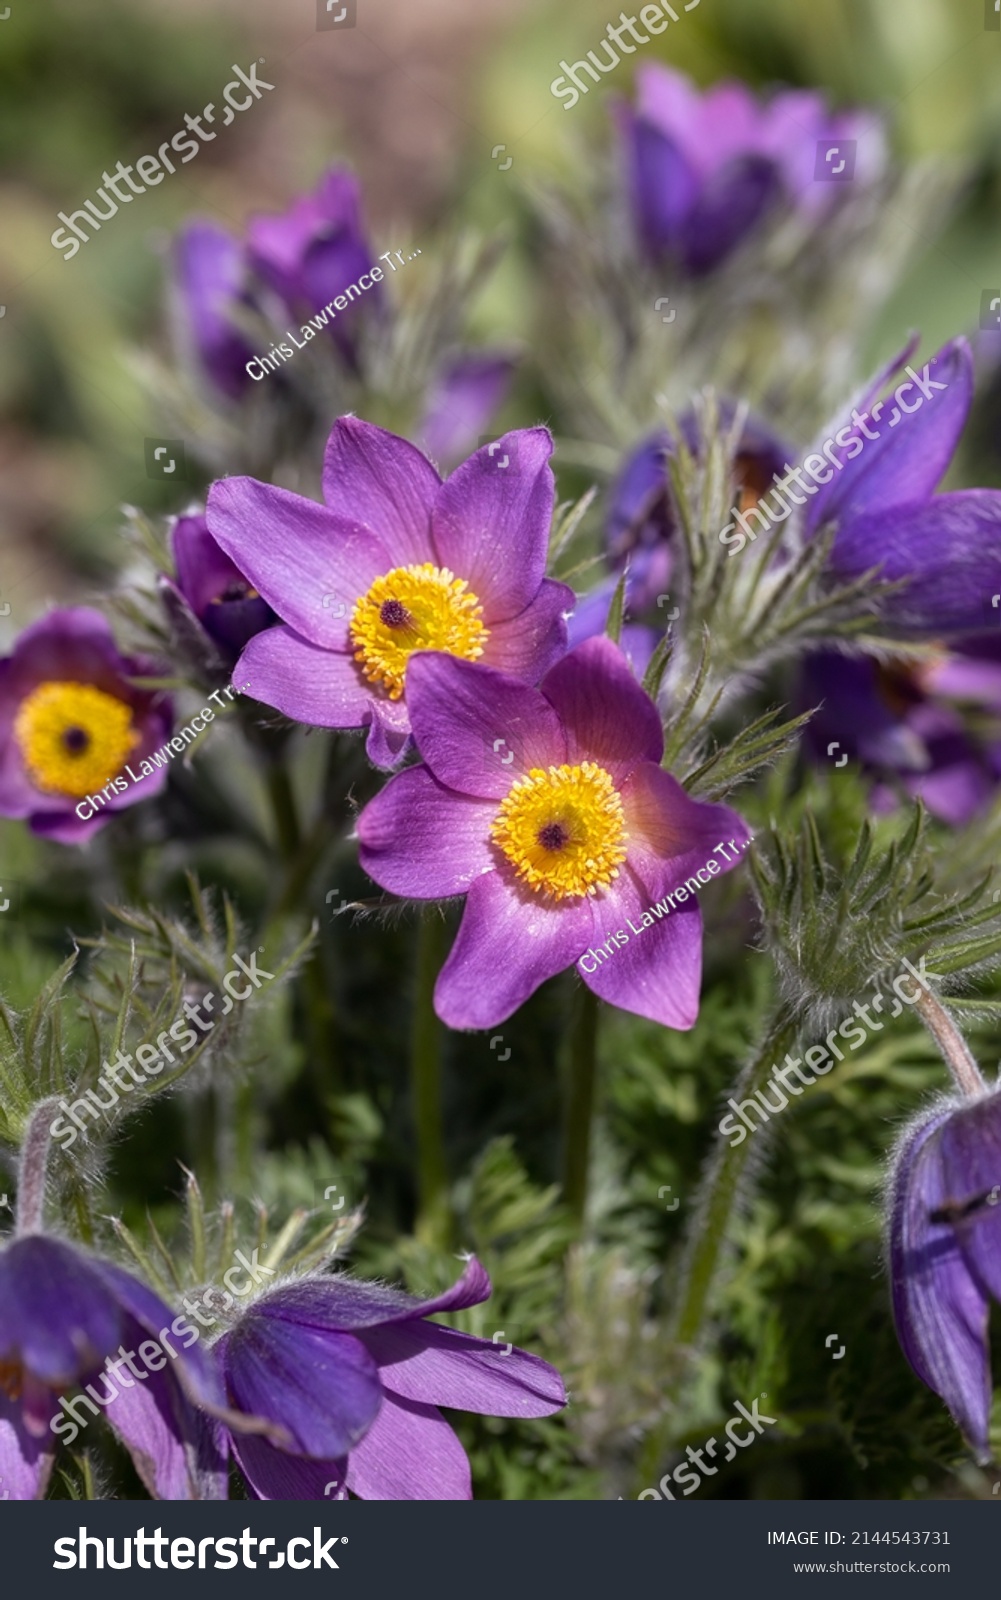 Closeup of flowers of Pasqueflower (Pulsatilla vulgaris) in a garden in spring #2144543731